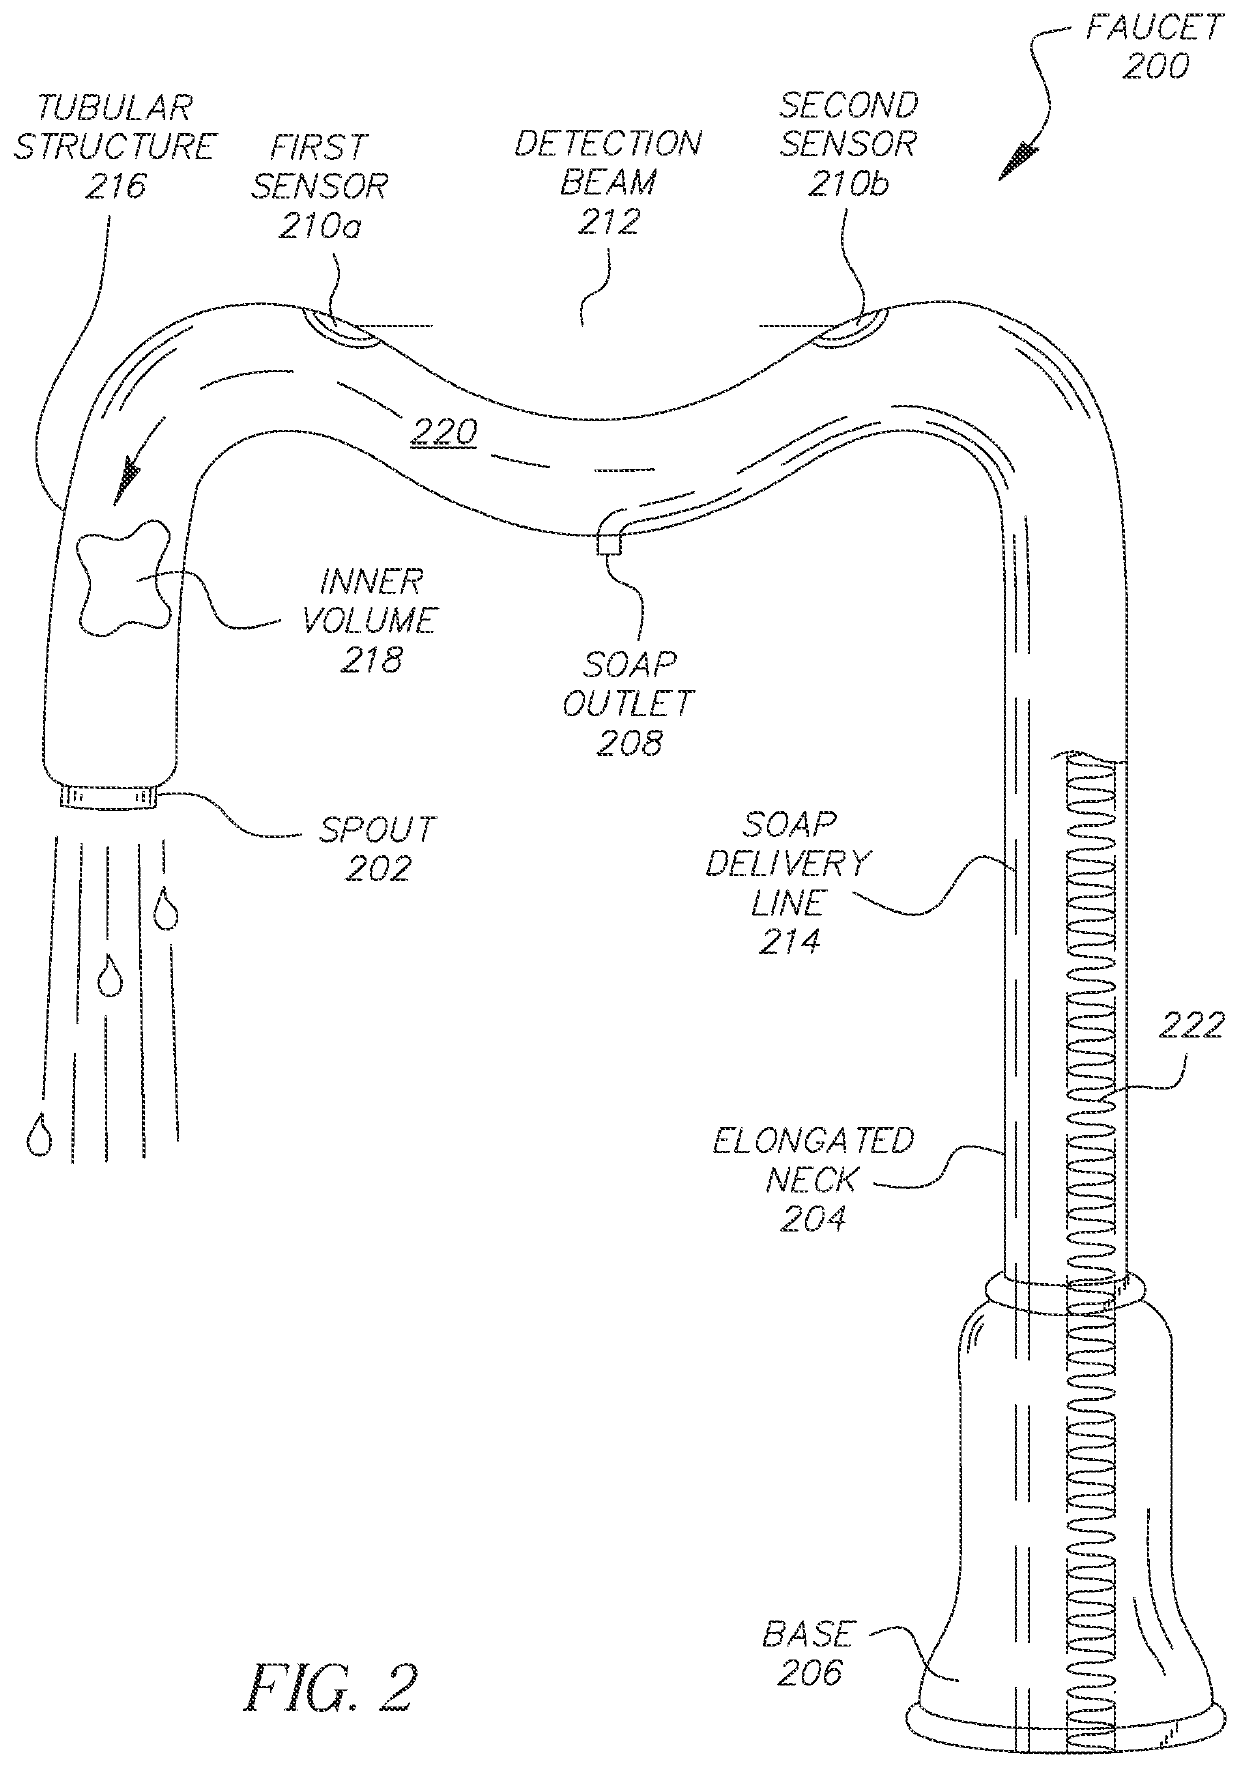 Faucet system comprising a liquid soap delivery line